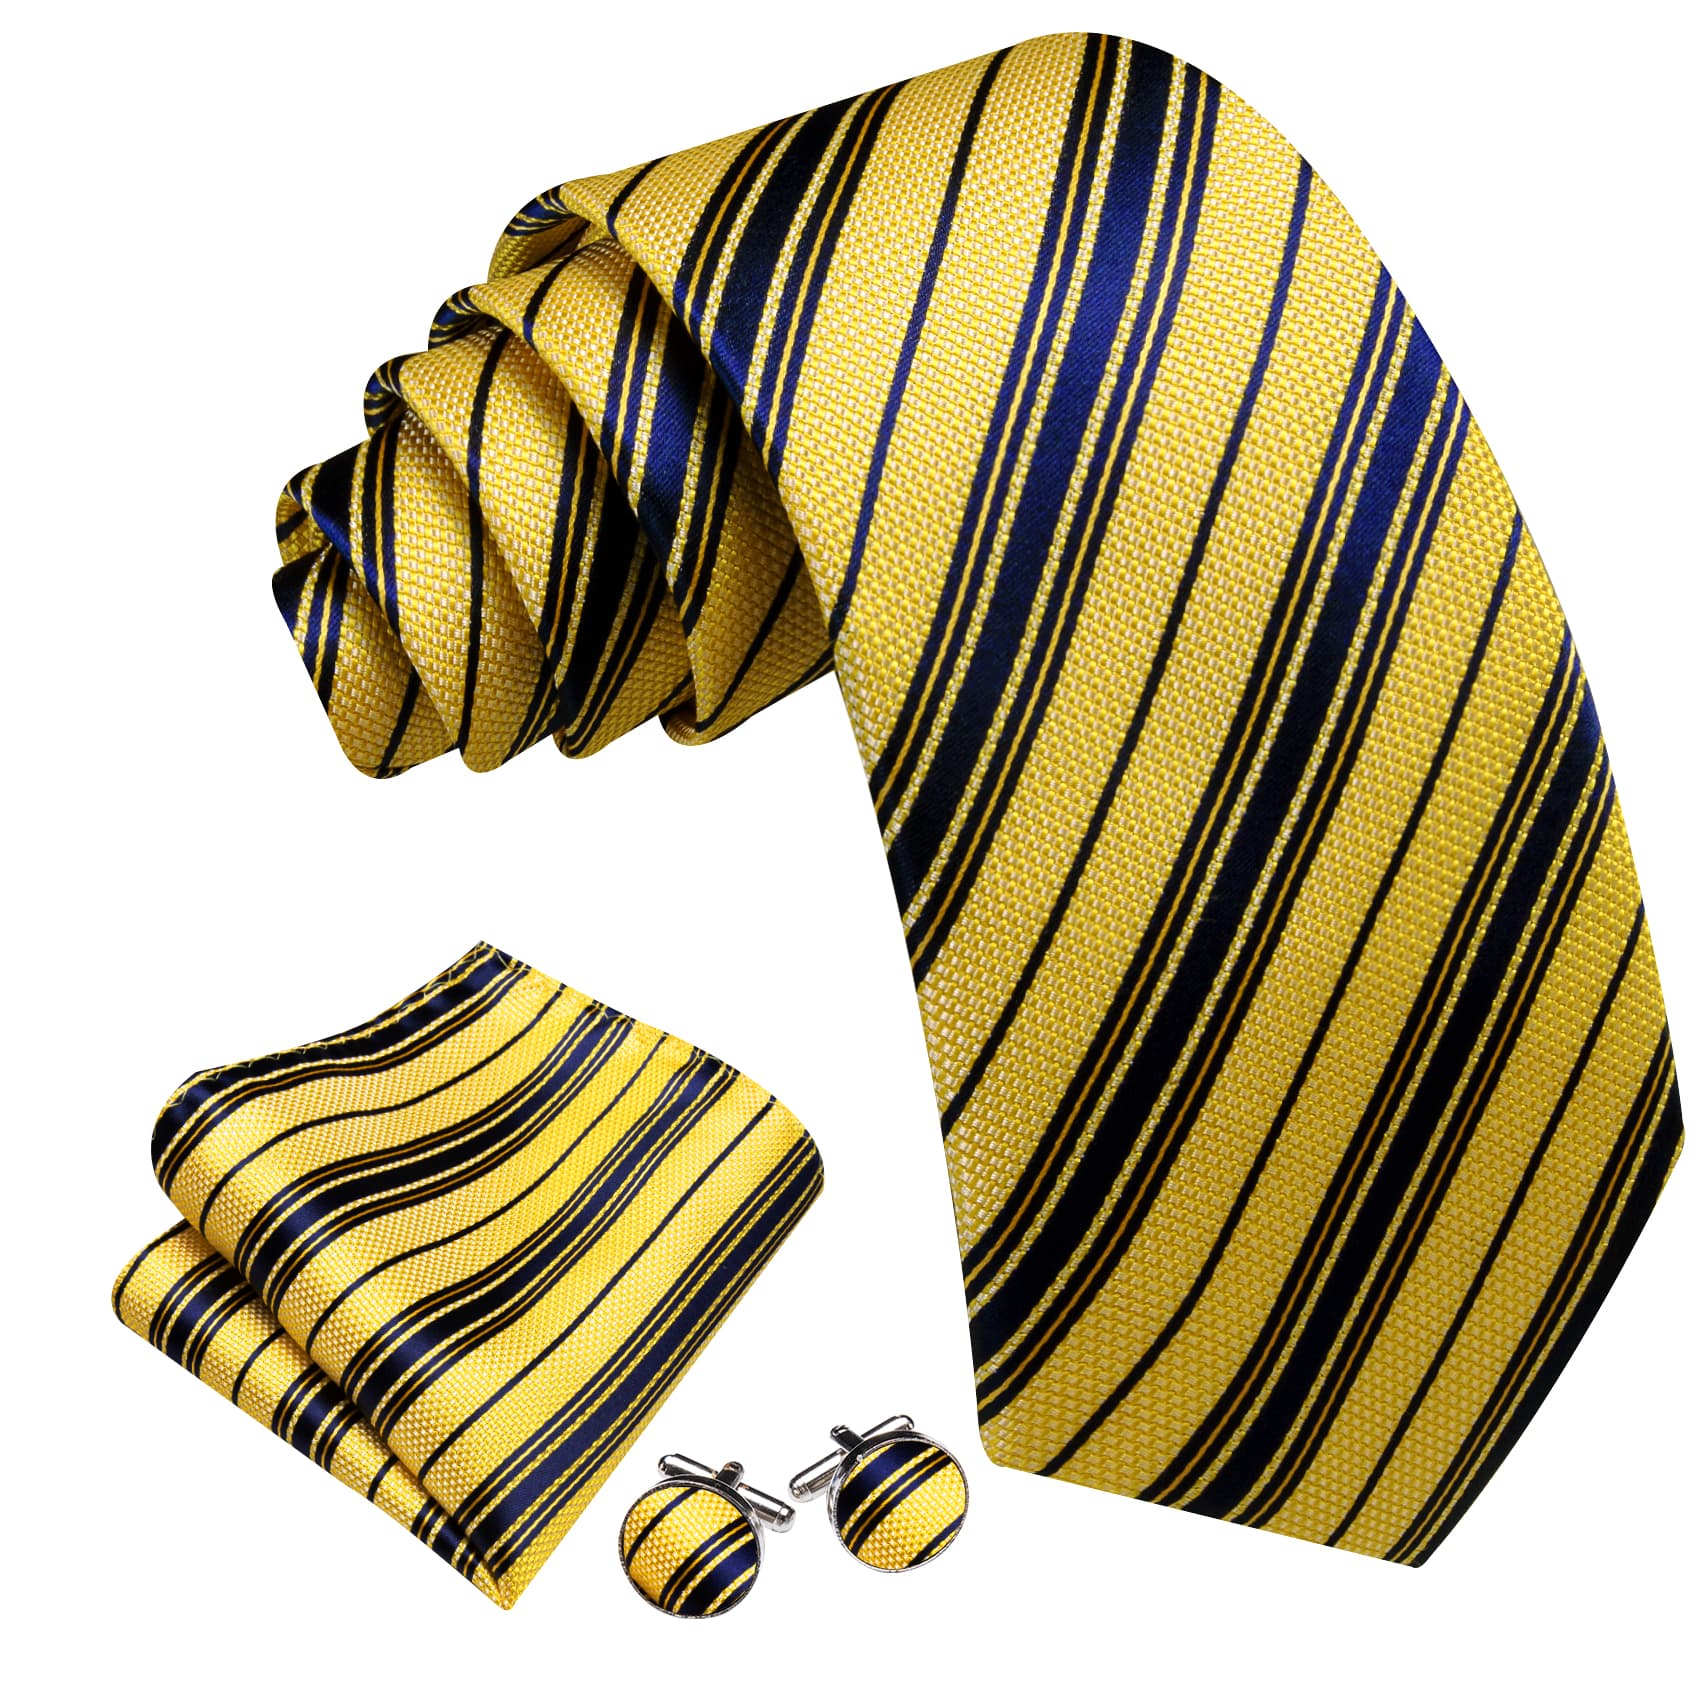  Yellow Navy Blue Striped Men's Tie Handkerchief Pocket Set